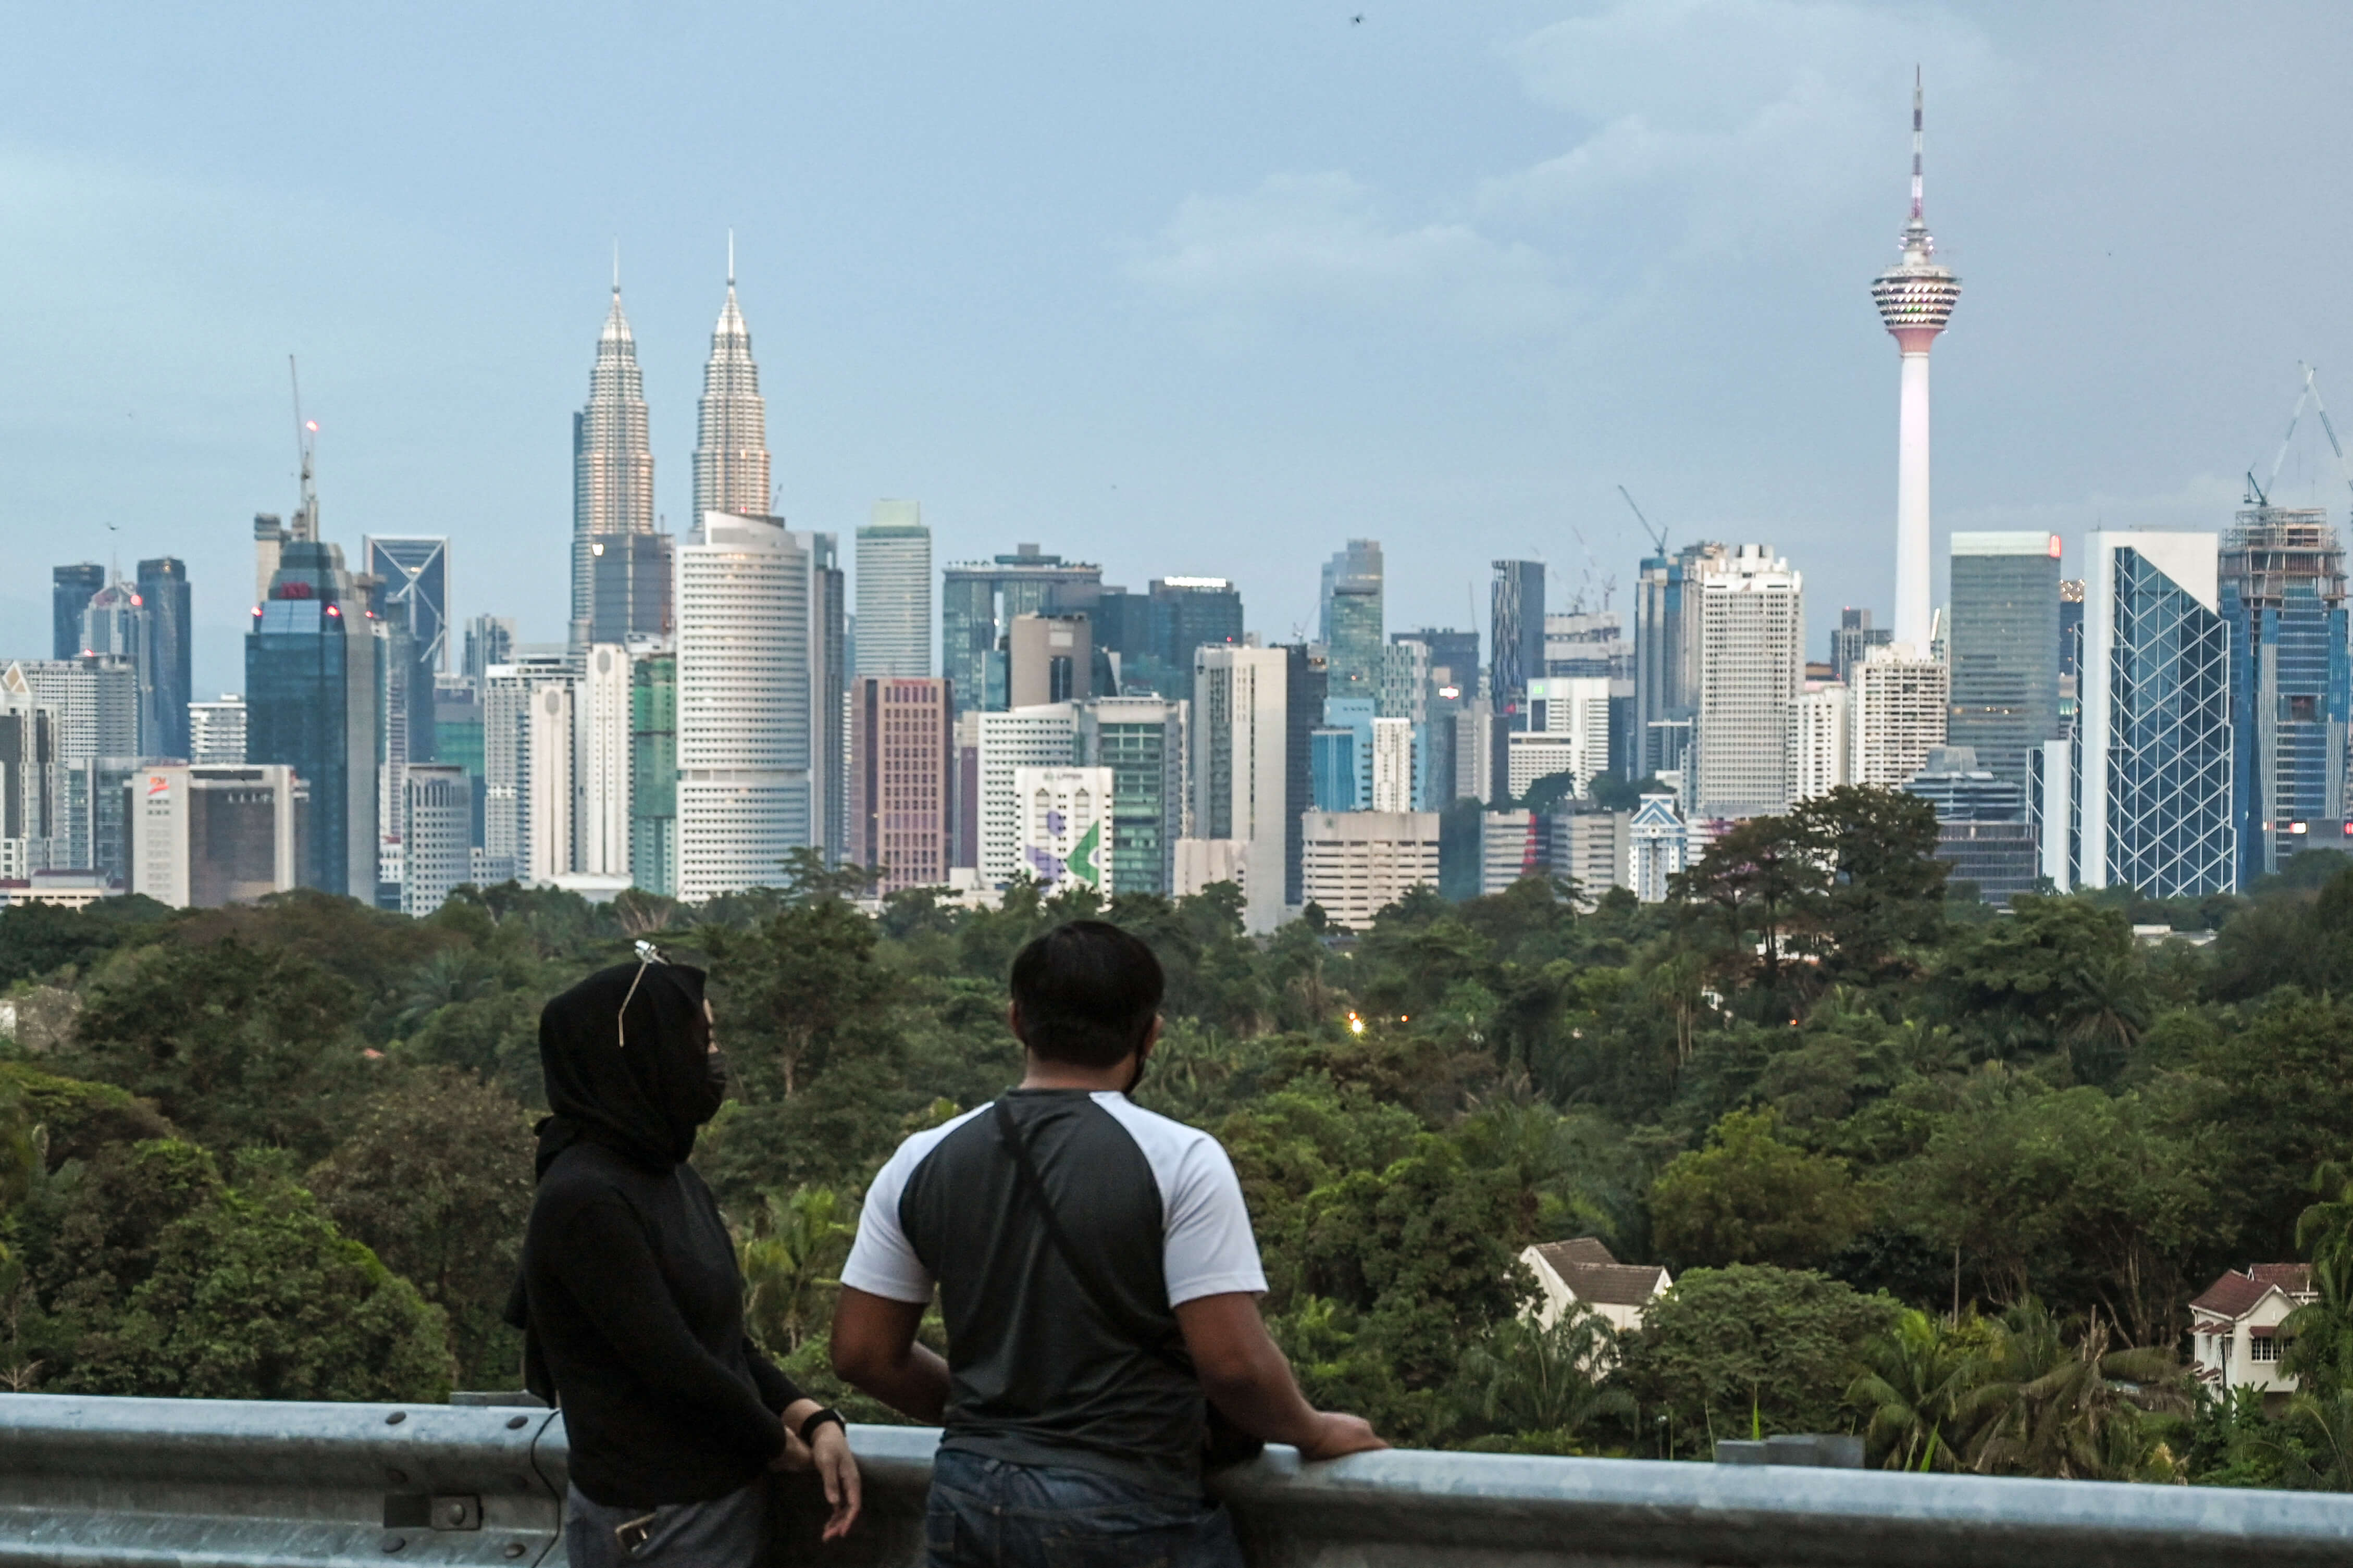 Malaysian universities experience a sharp intake in international enrolment for PhD programmes